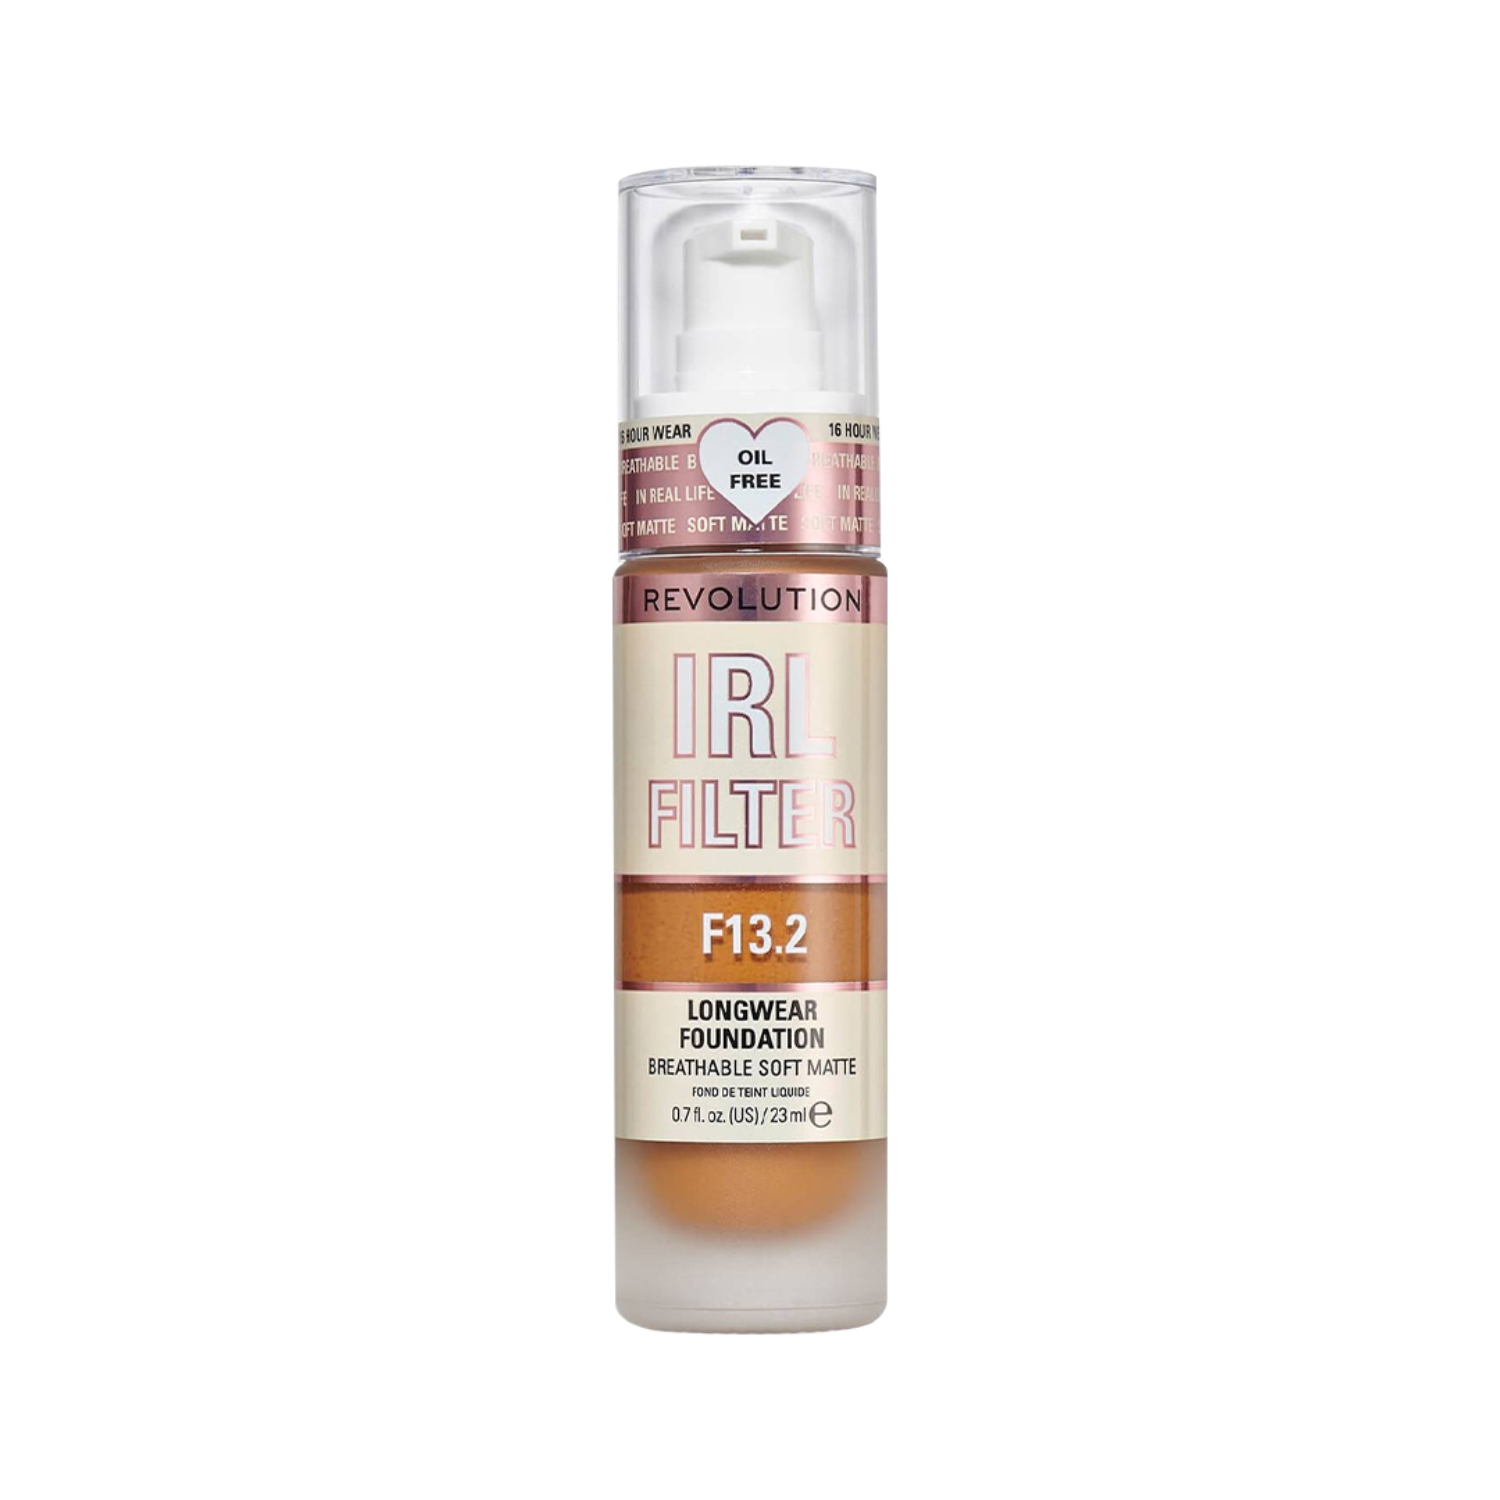 Makeup Revolution | Makeup Revolution Irl Filter Longwear Foundation - F13.2 (23ml)